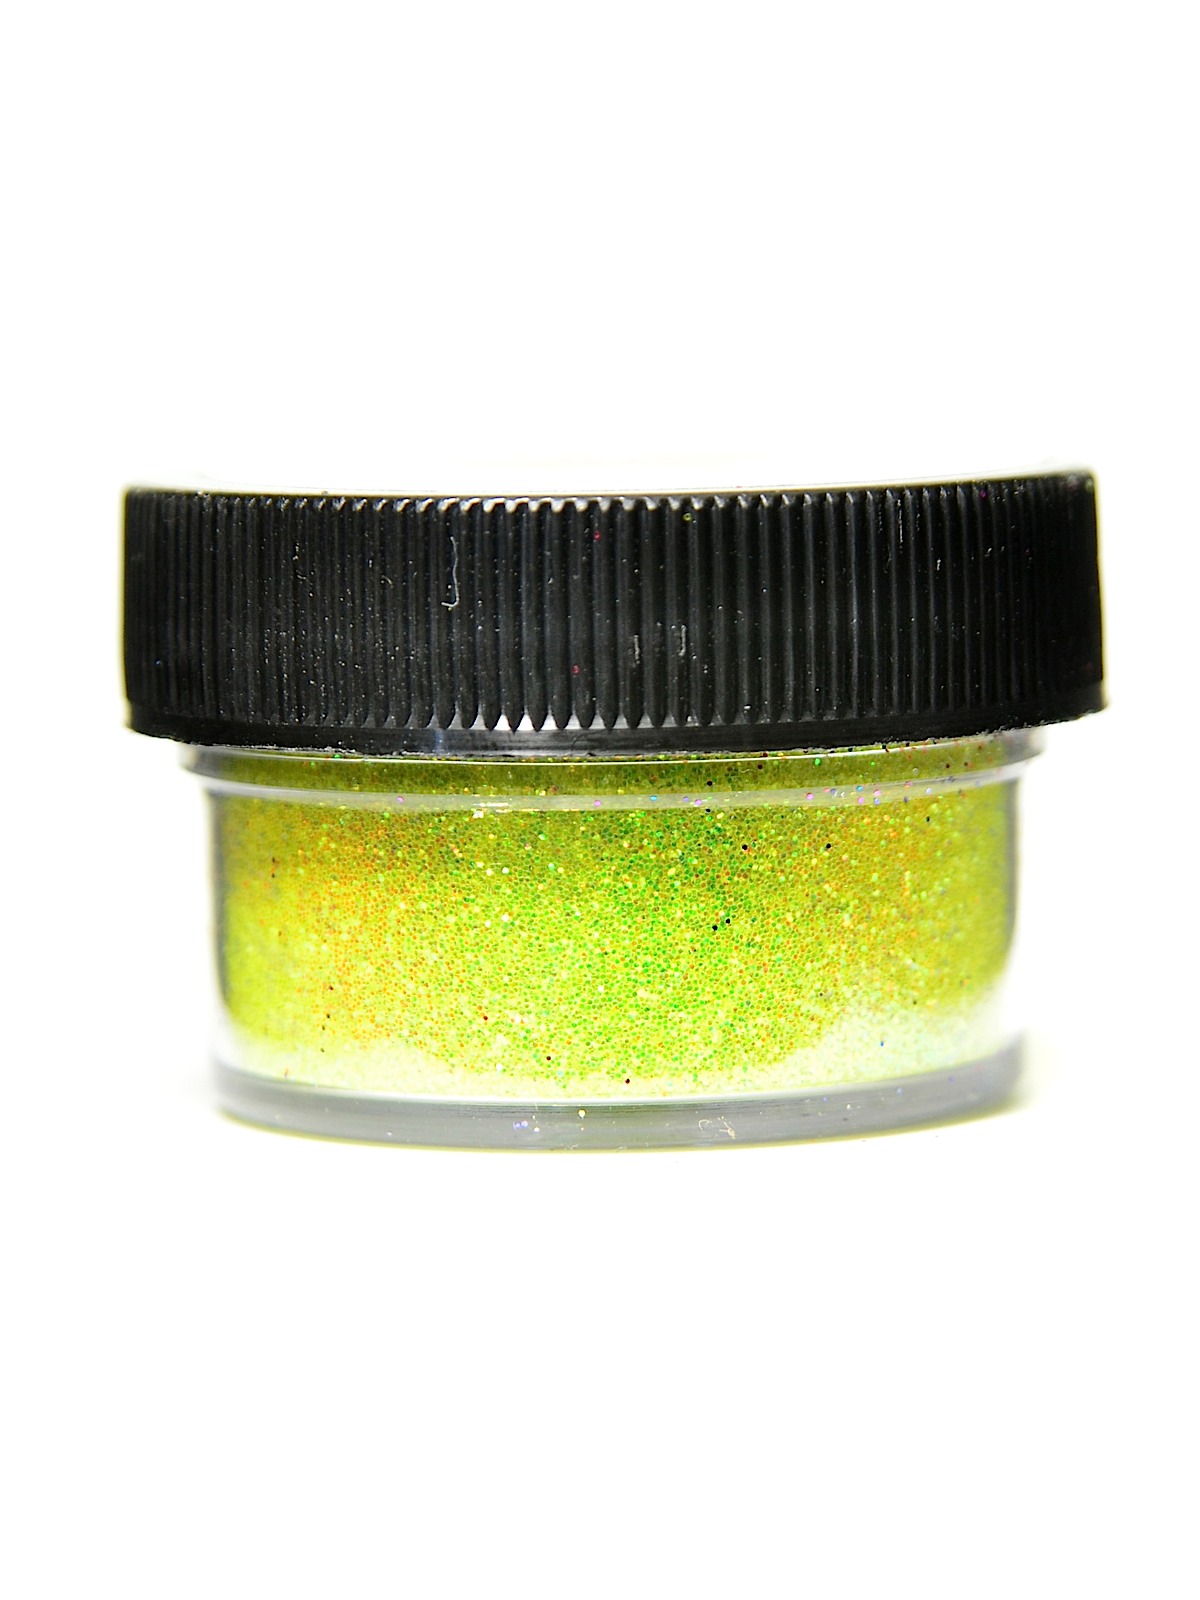 Ultrafine Transparent Glitter Chrysalis 1 2 Oz. Jar